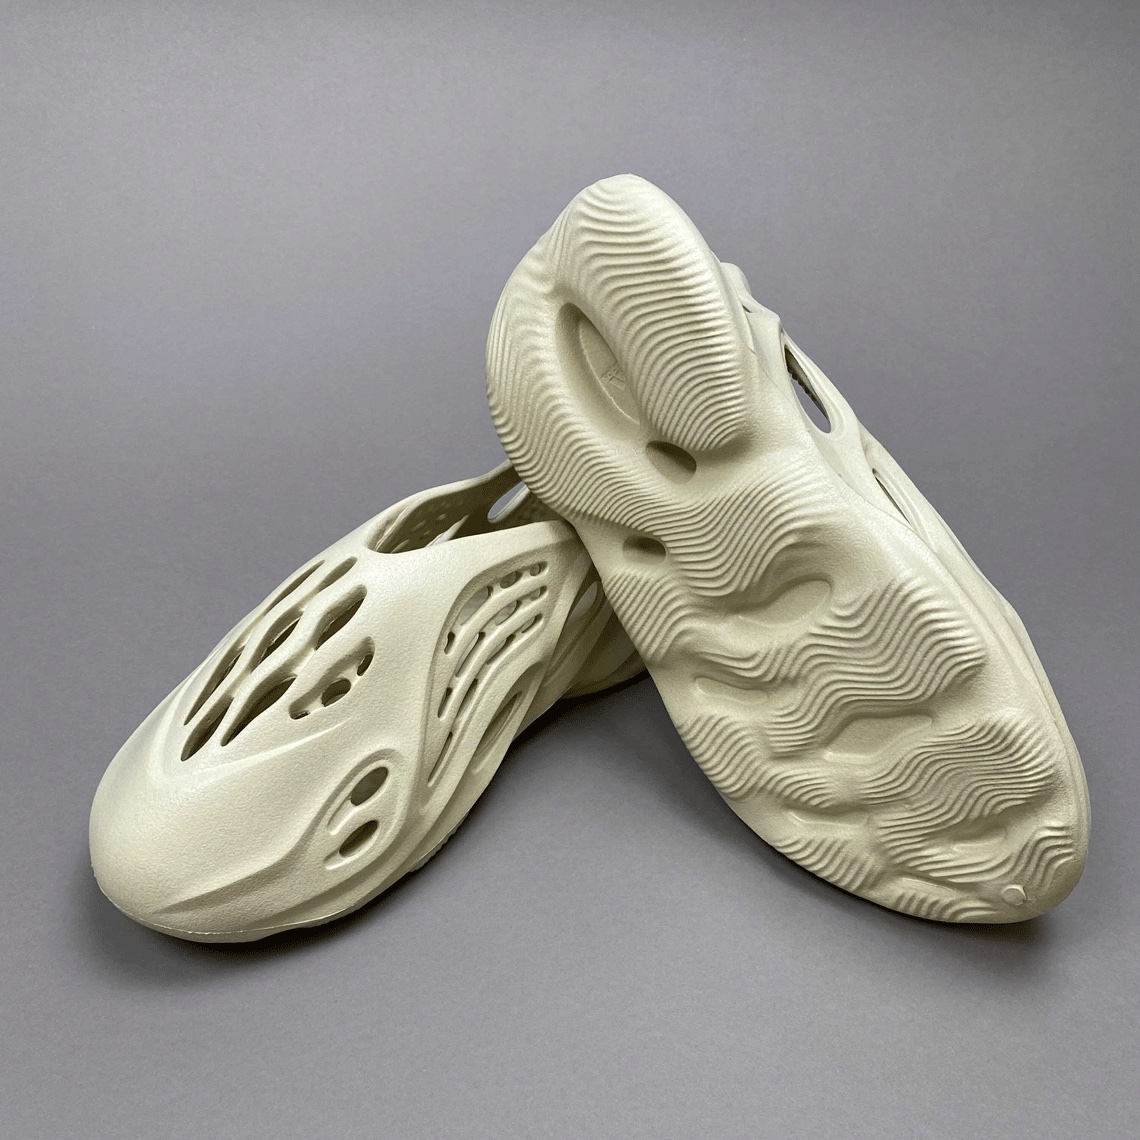 adidas Yeezy Foam Runner "Sand" Release Date | SneakerNews.com